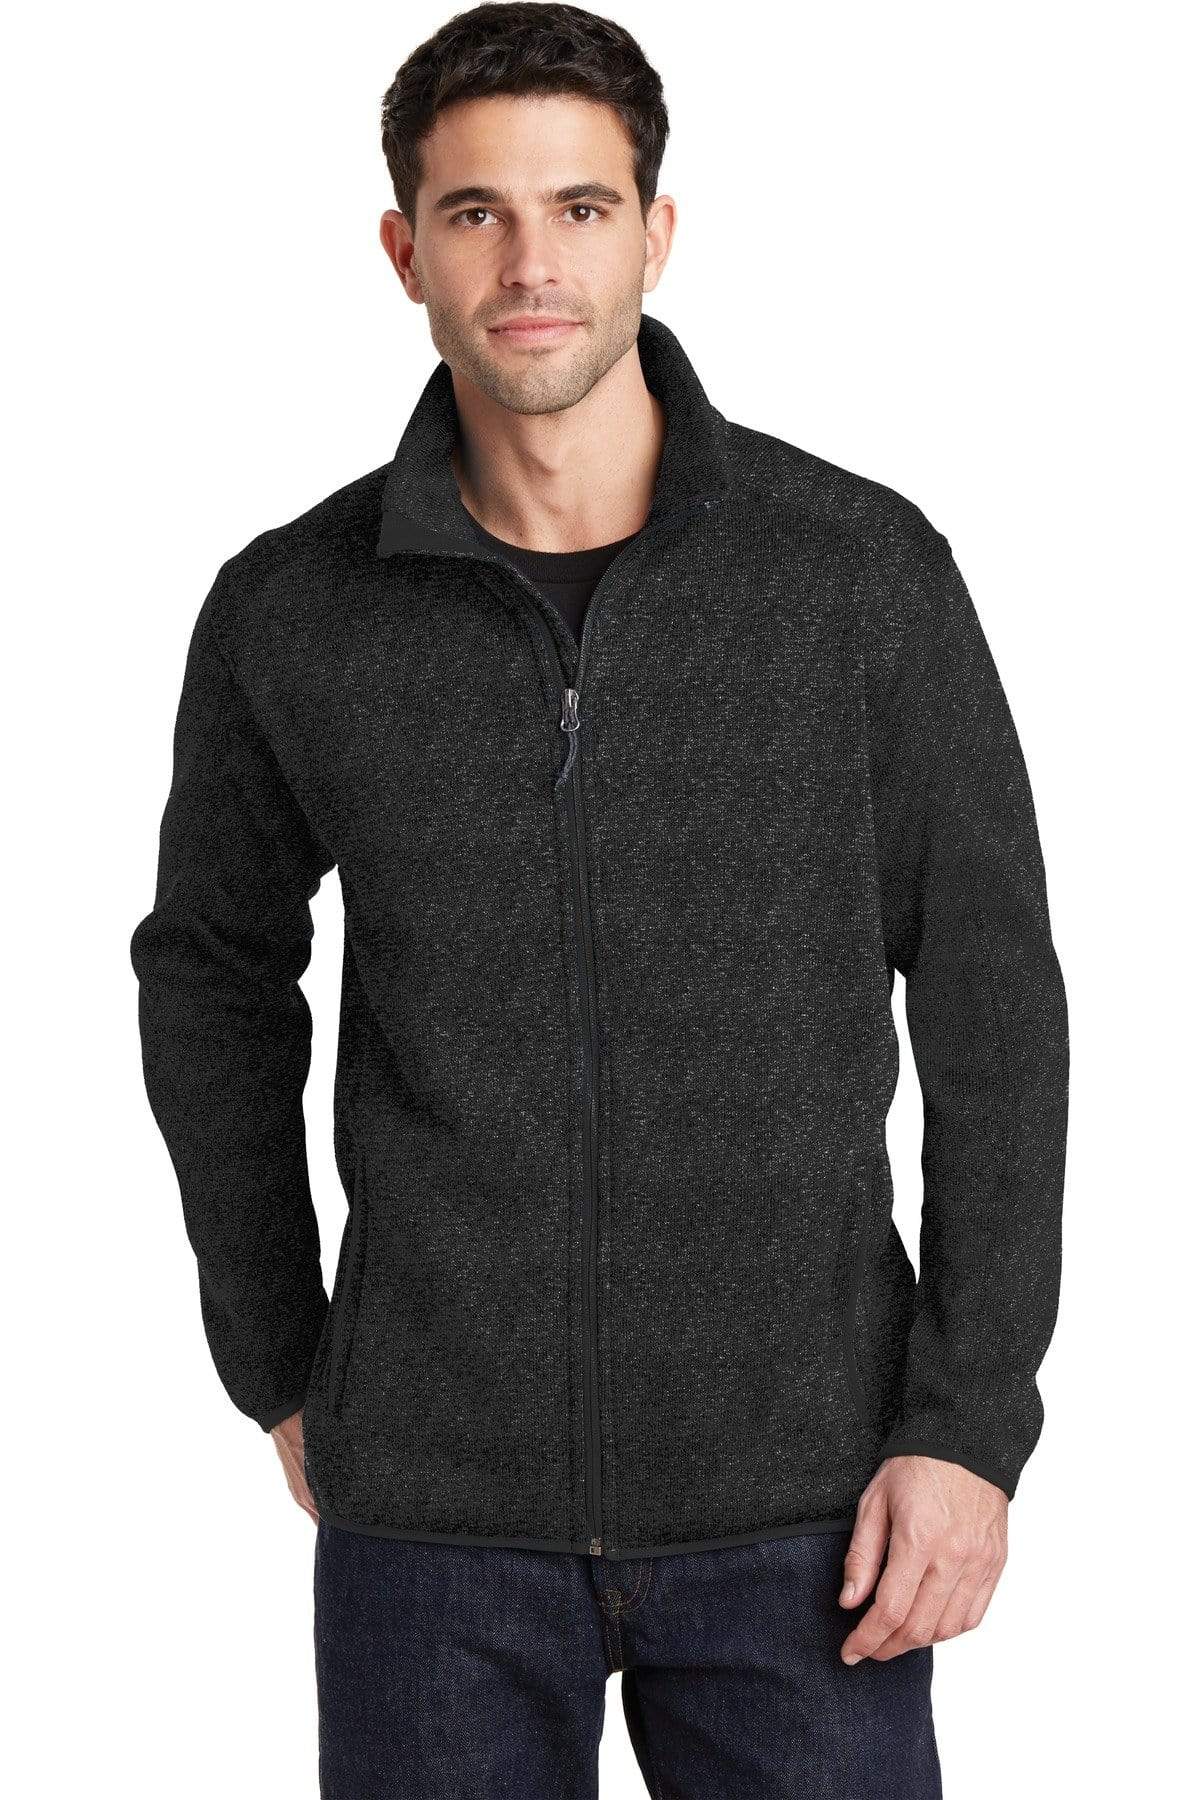 Port Authority Sweater Jacket F23210241